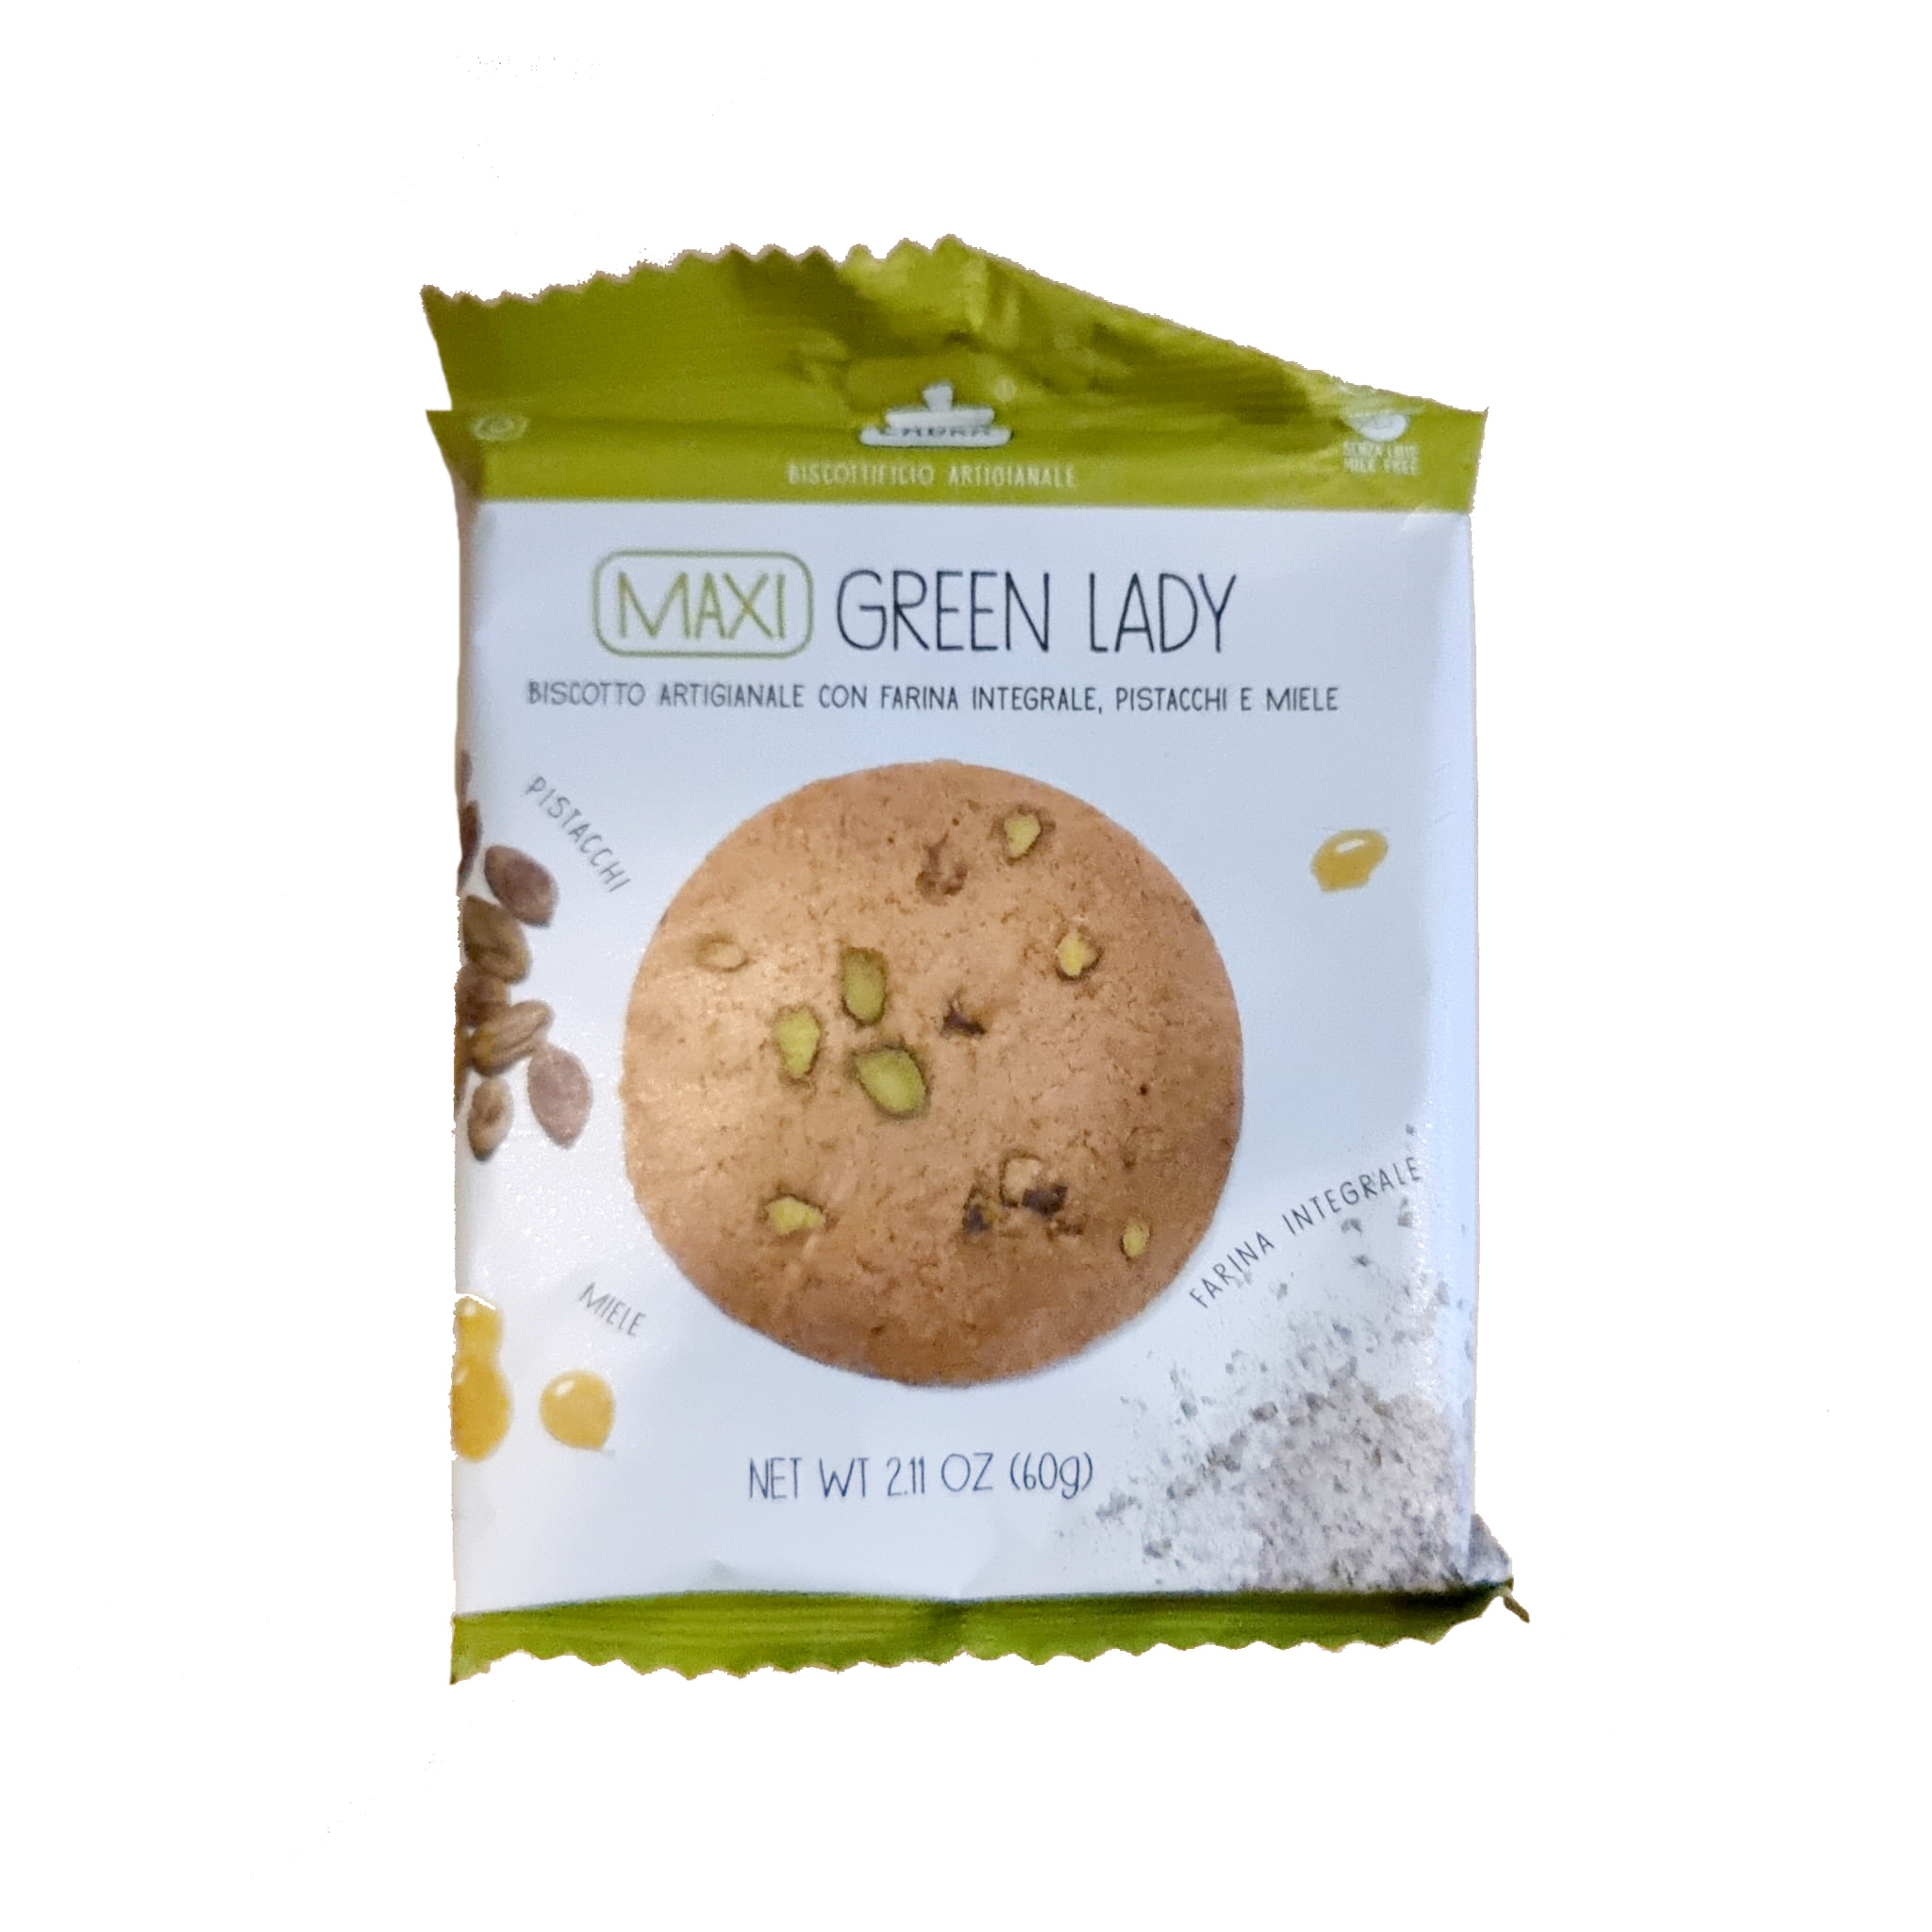 Biscuiti artizanali - Maxi Green Lady, 60g | Mondo di Laura